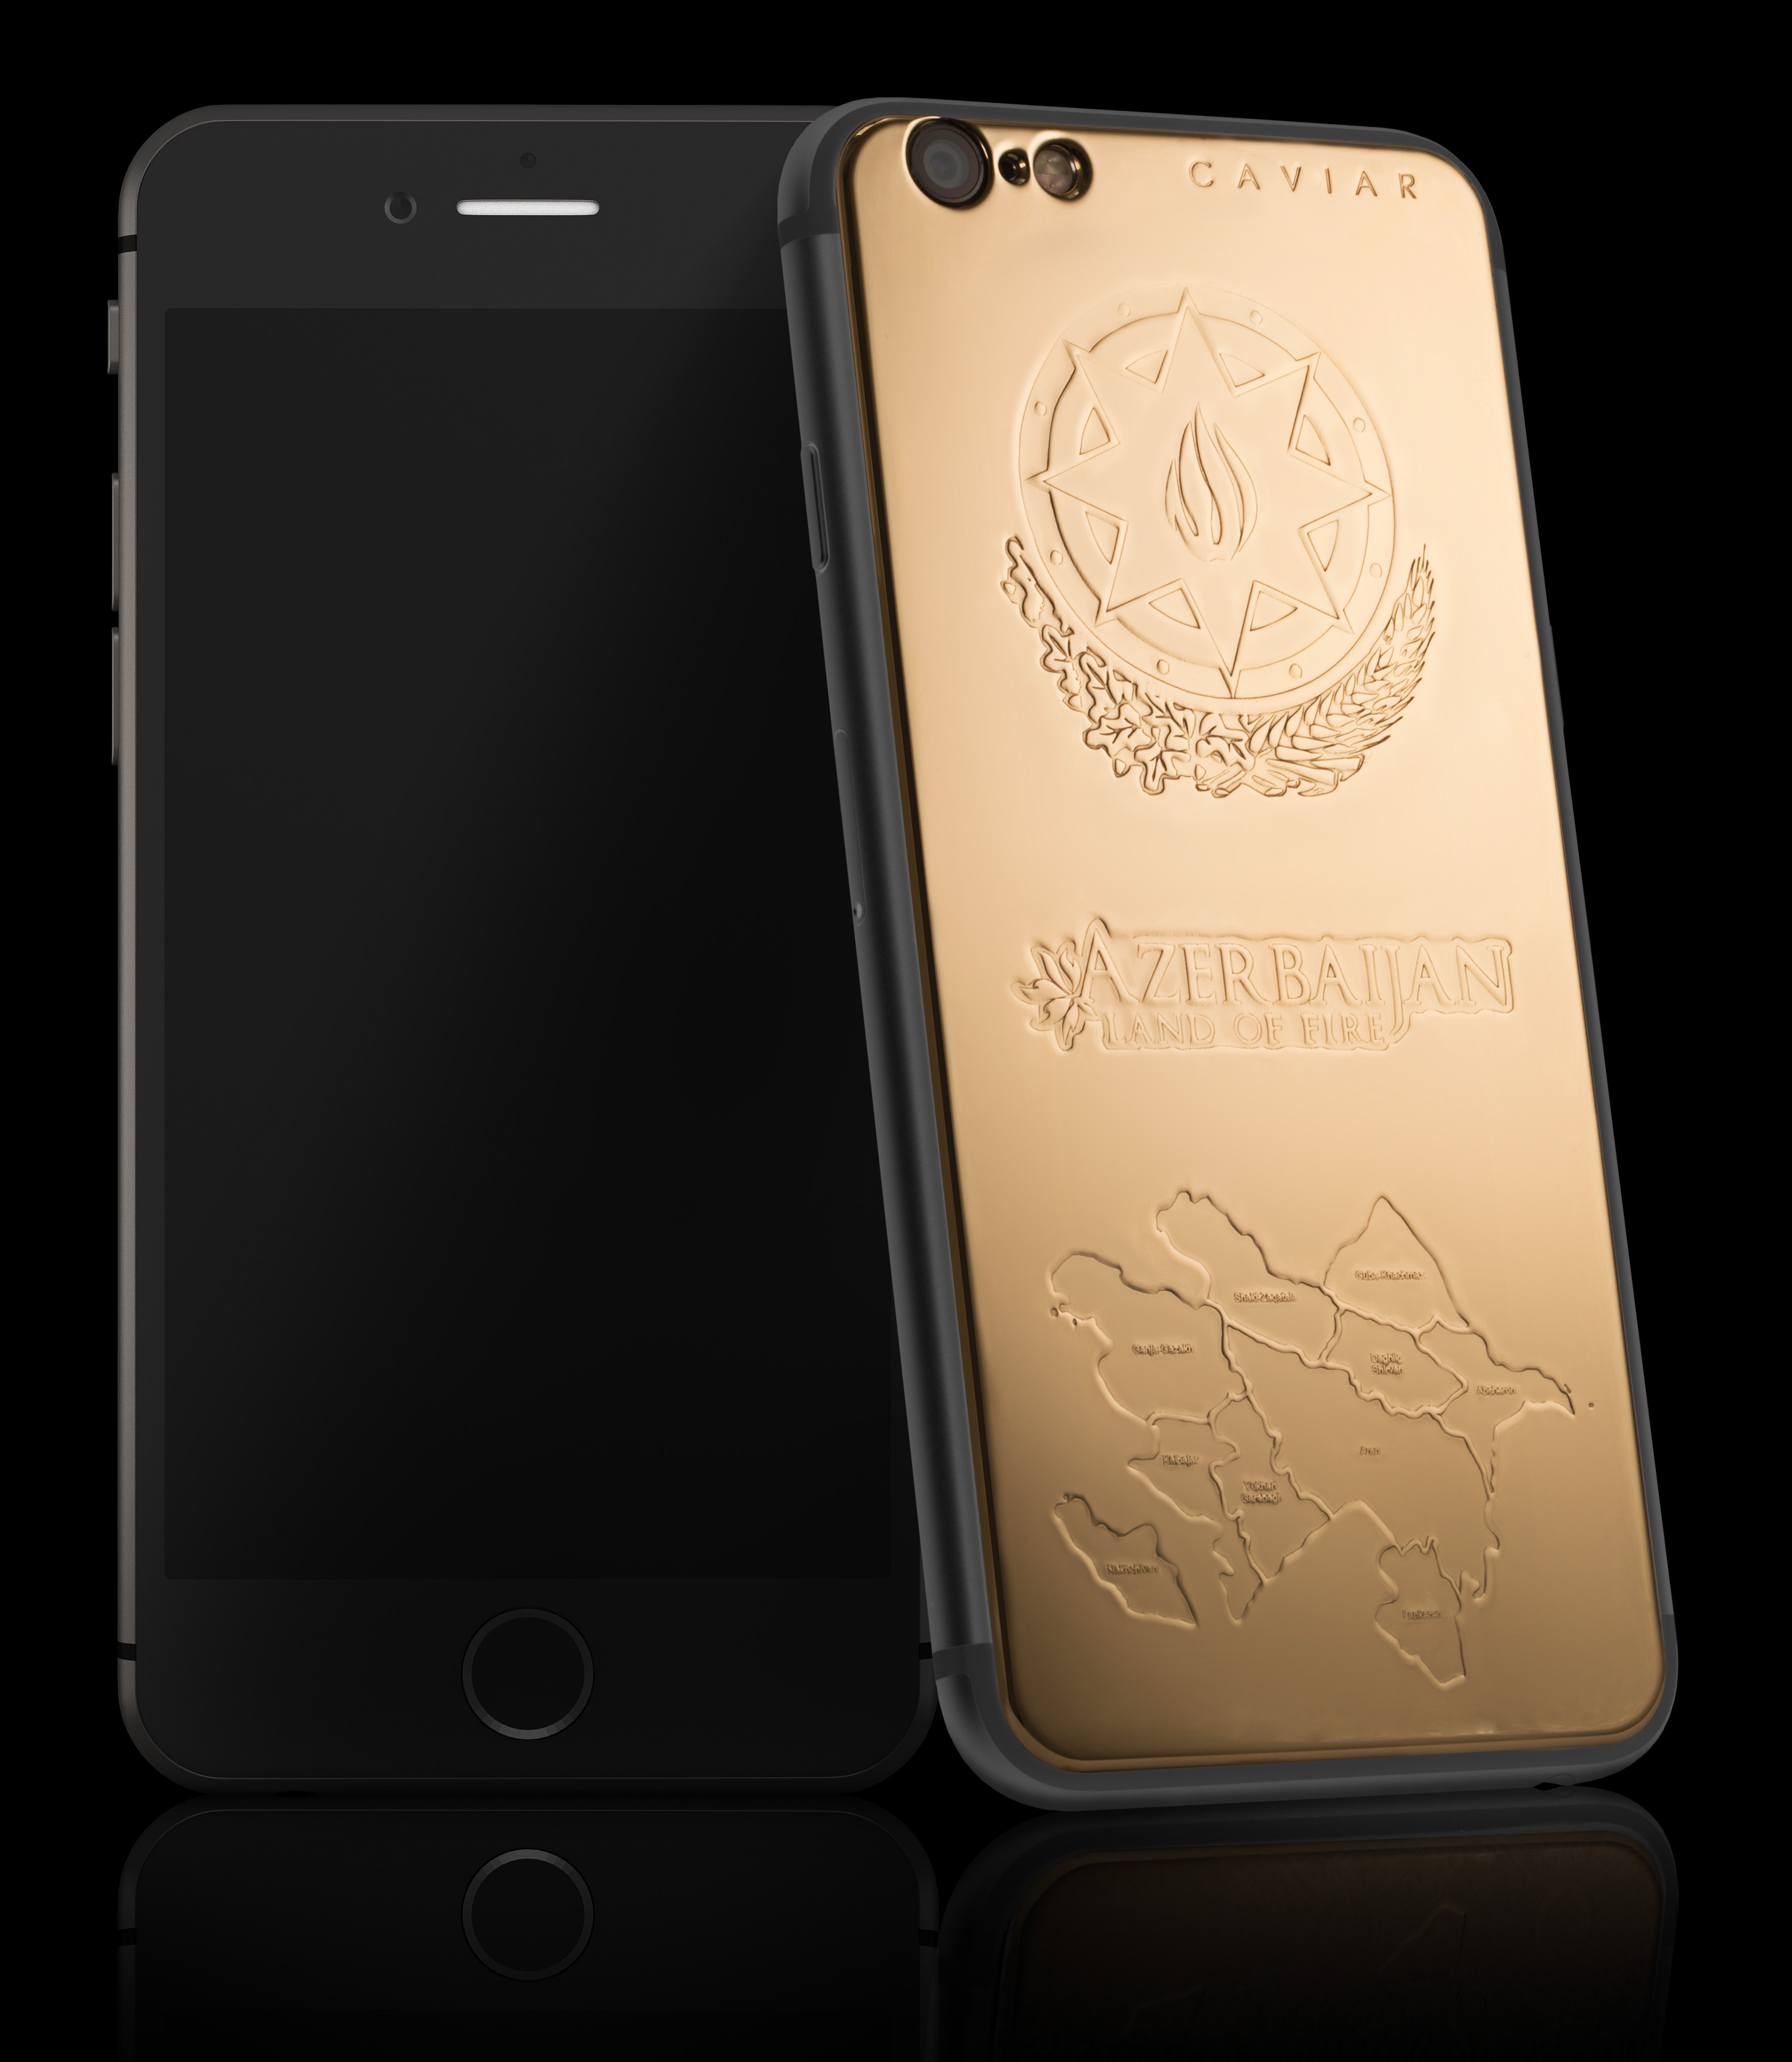 Caviar unveils new gold iPhone dedicated to Azerbaijan